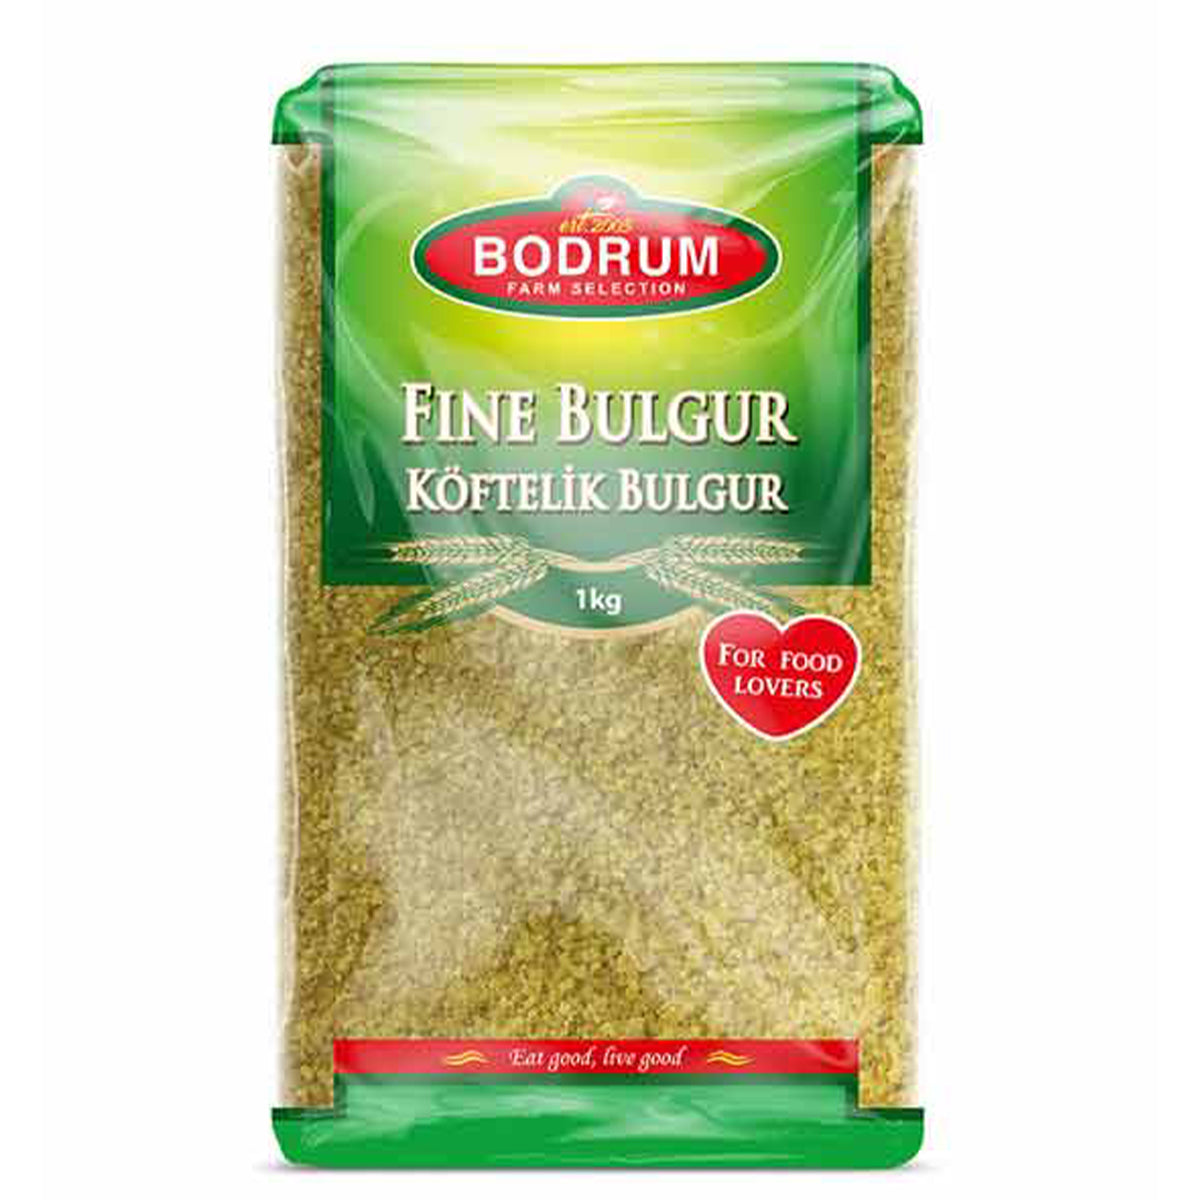 A bag of Bodrum - Fine Bulgur - 1kg on a white background.